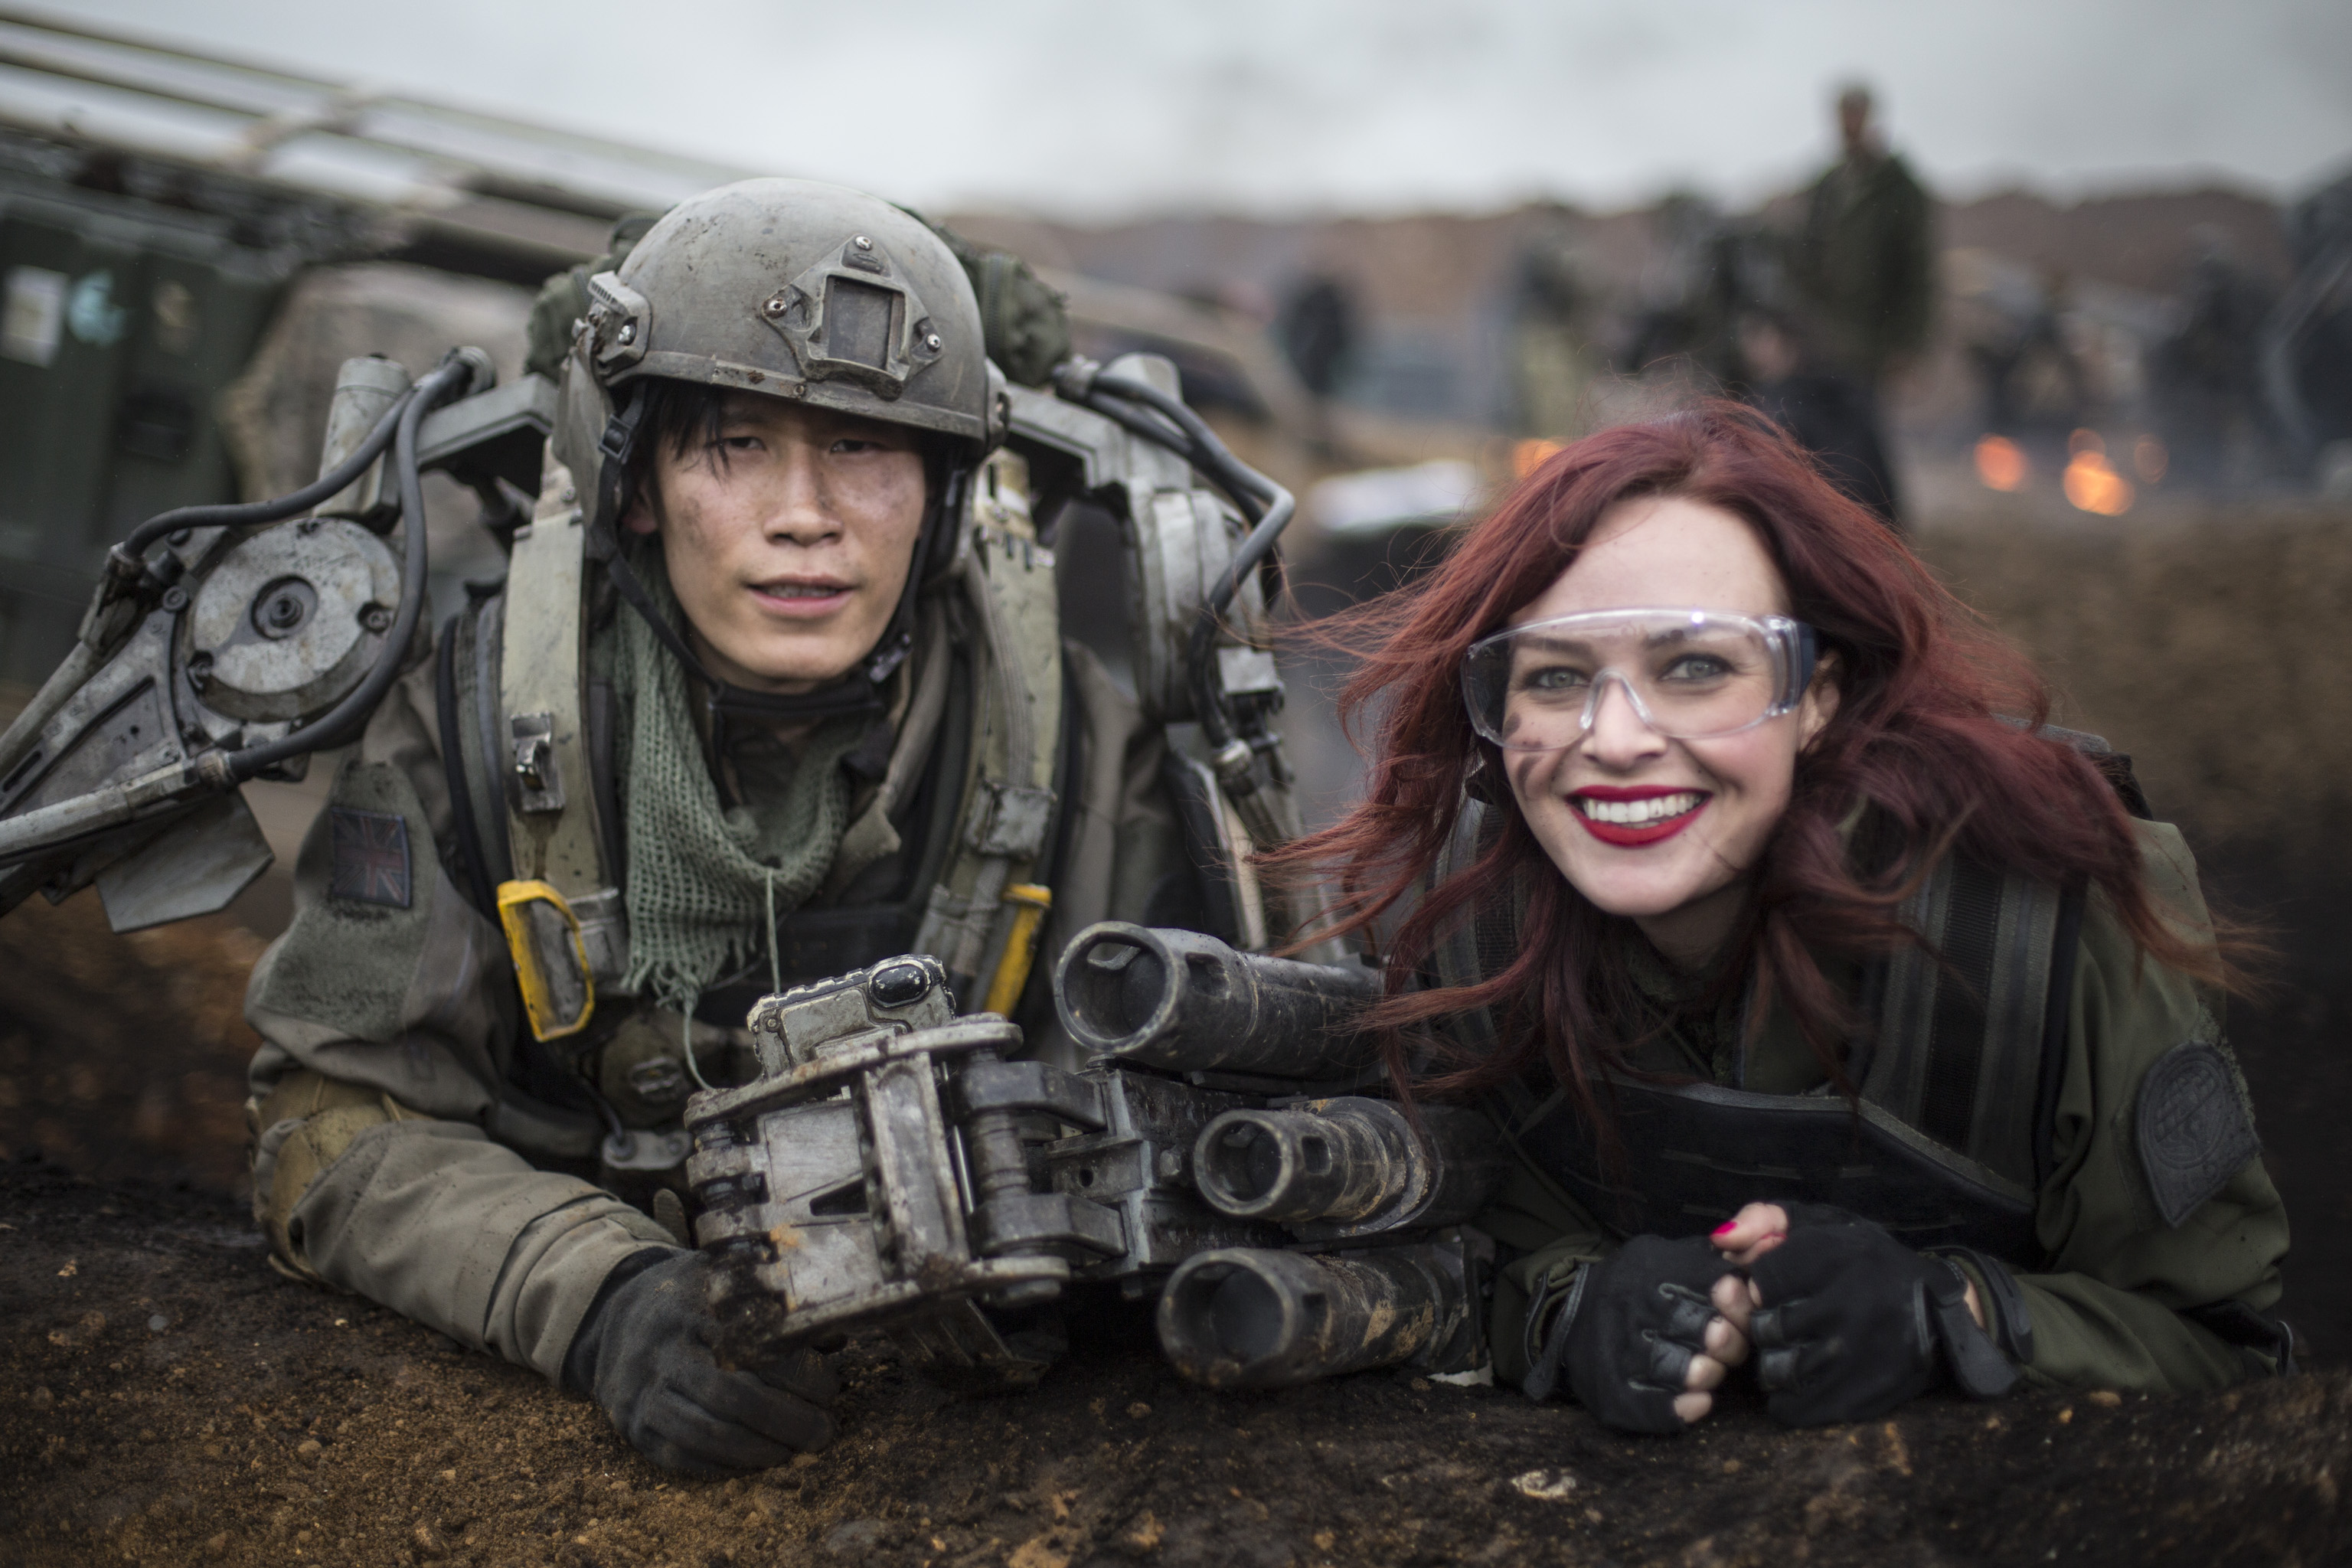 Bruce Chong with Alicia Malone. Edge of Tomorrow mini-movie (2014)